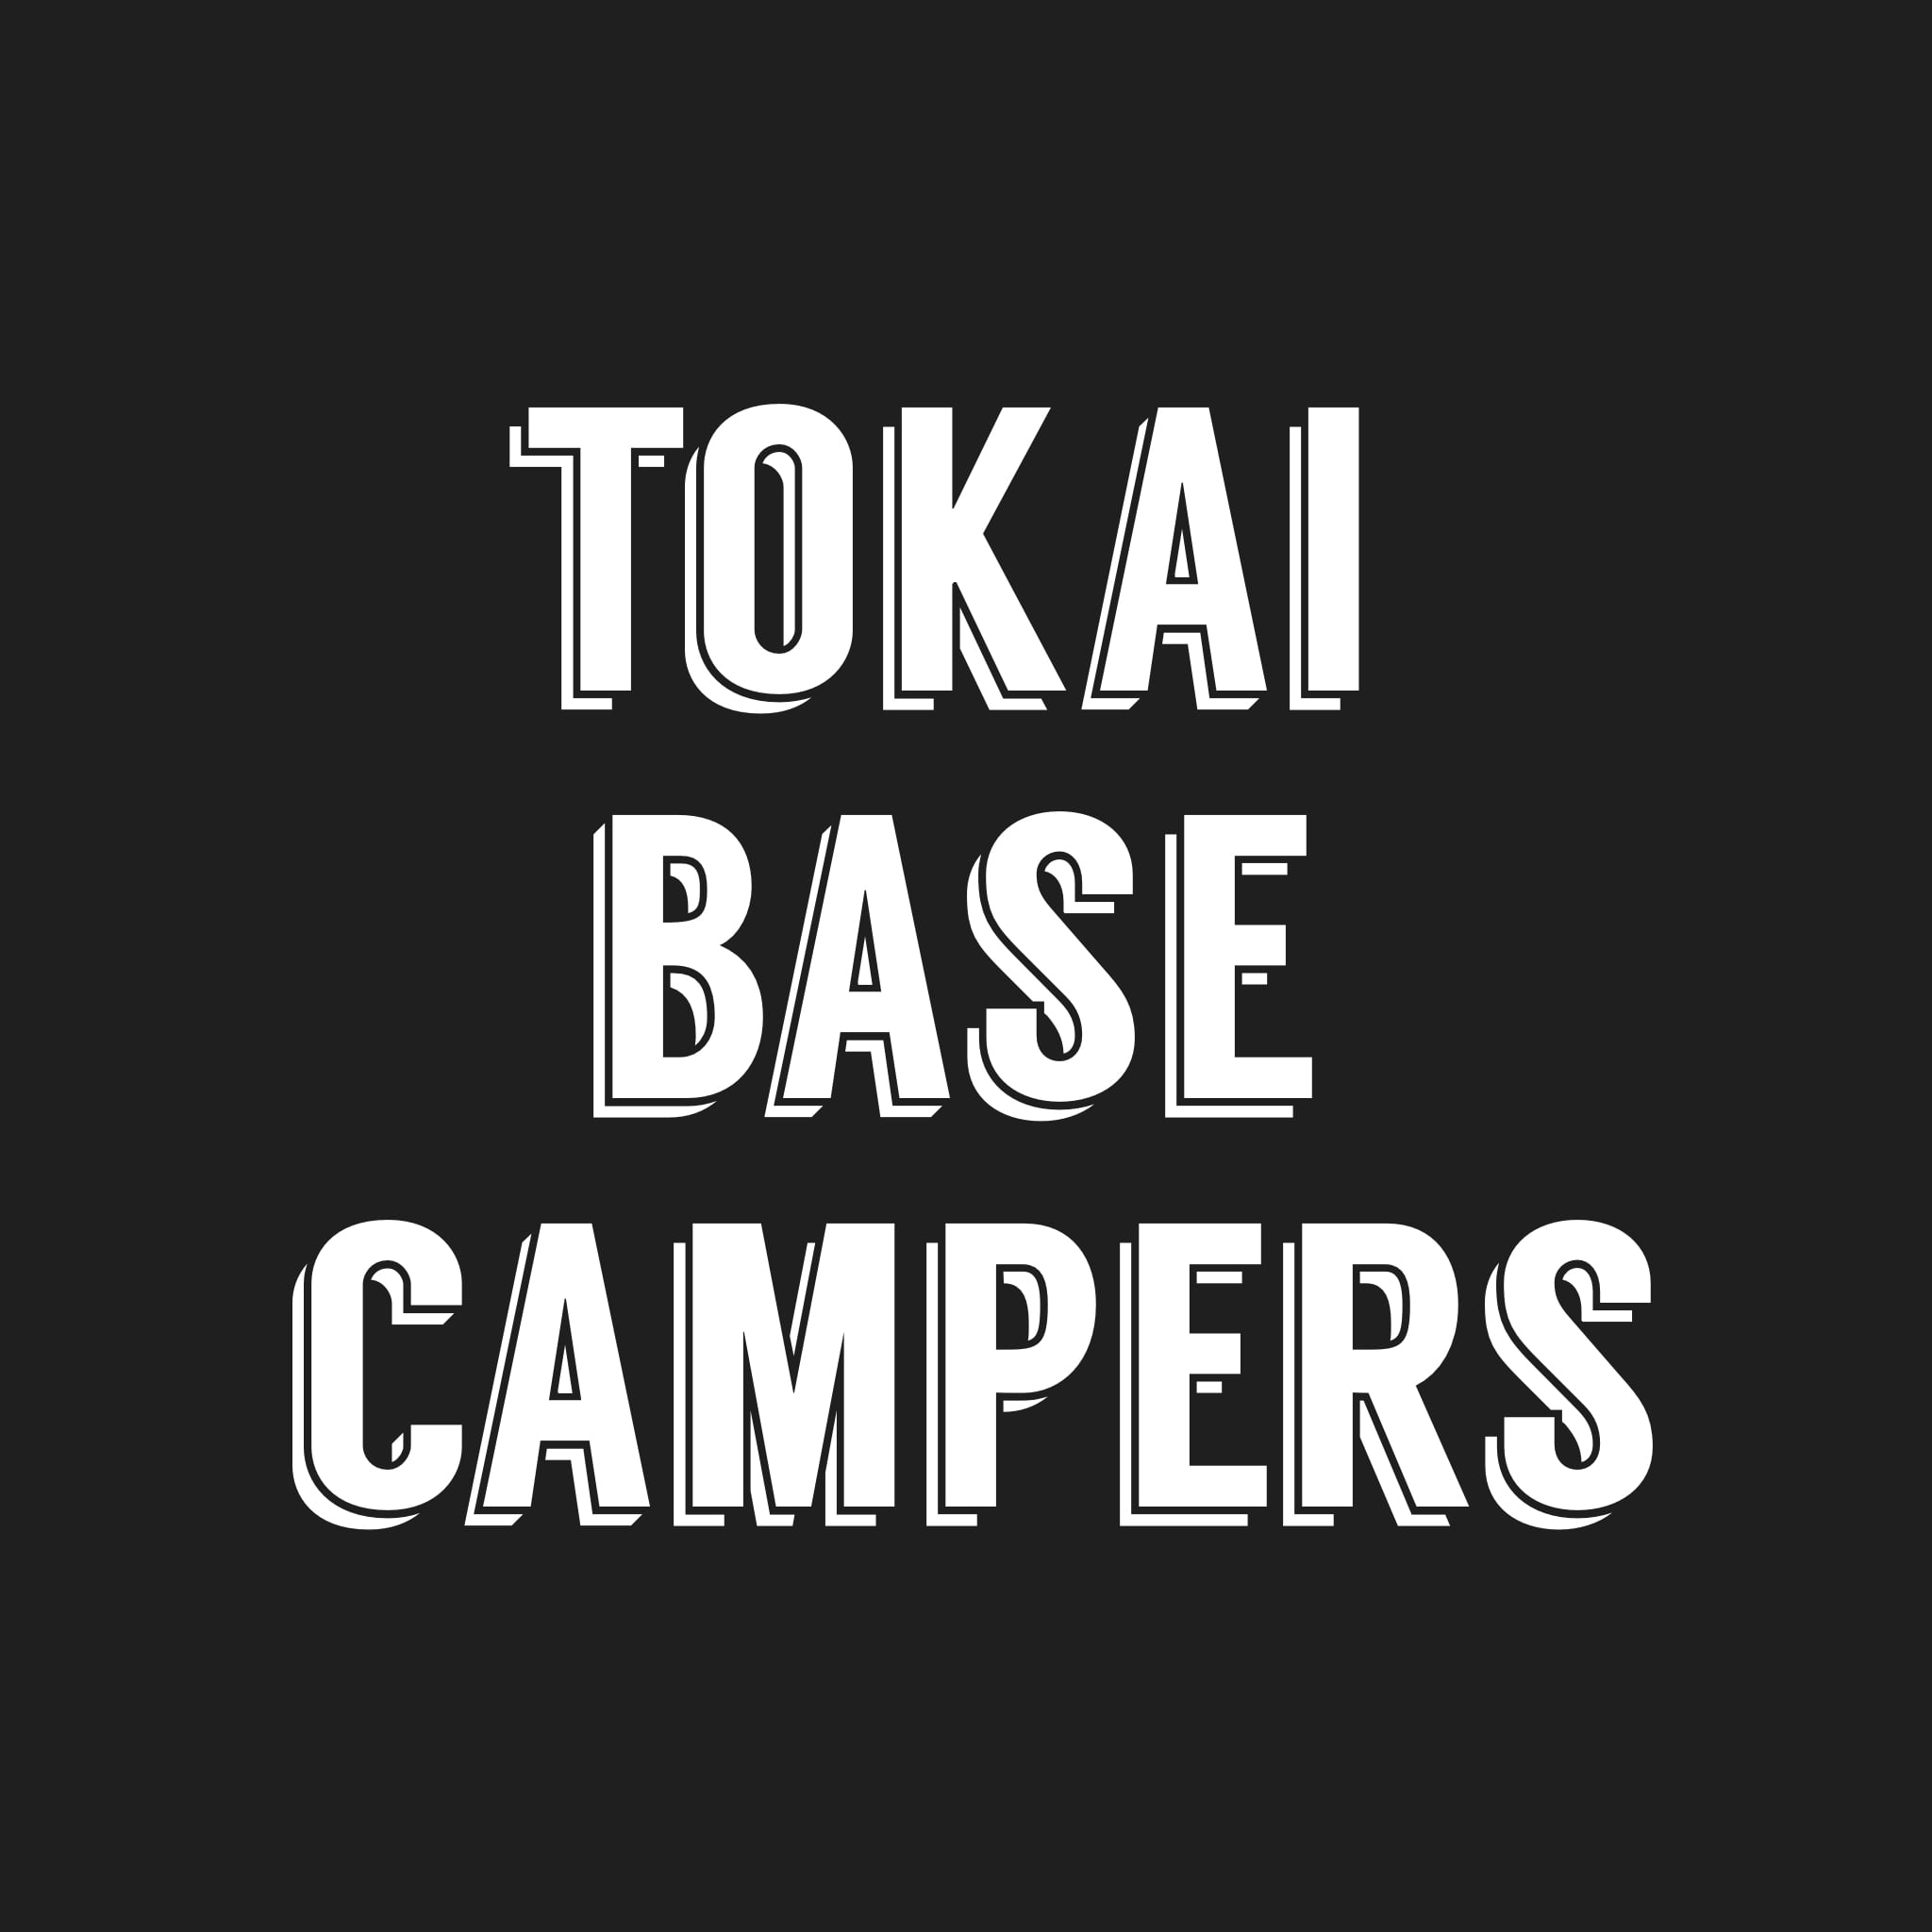 TOKAI BASE CAMPERS